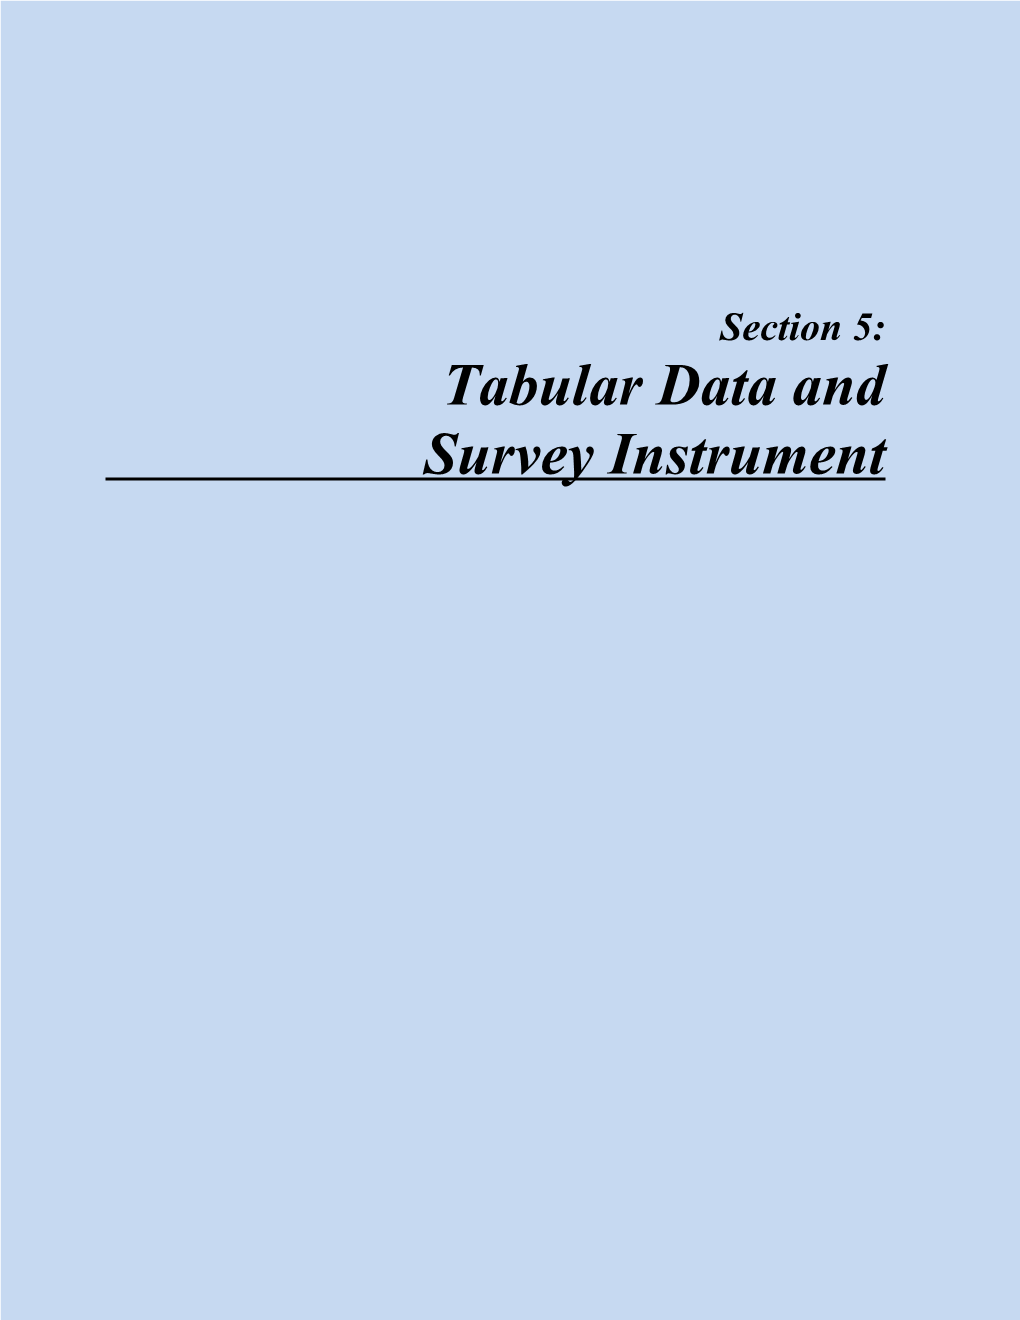 Tabular Data and Survey Instrument